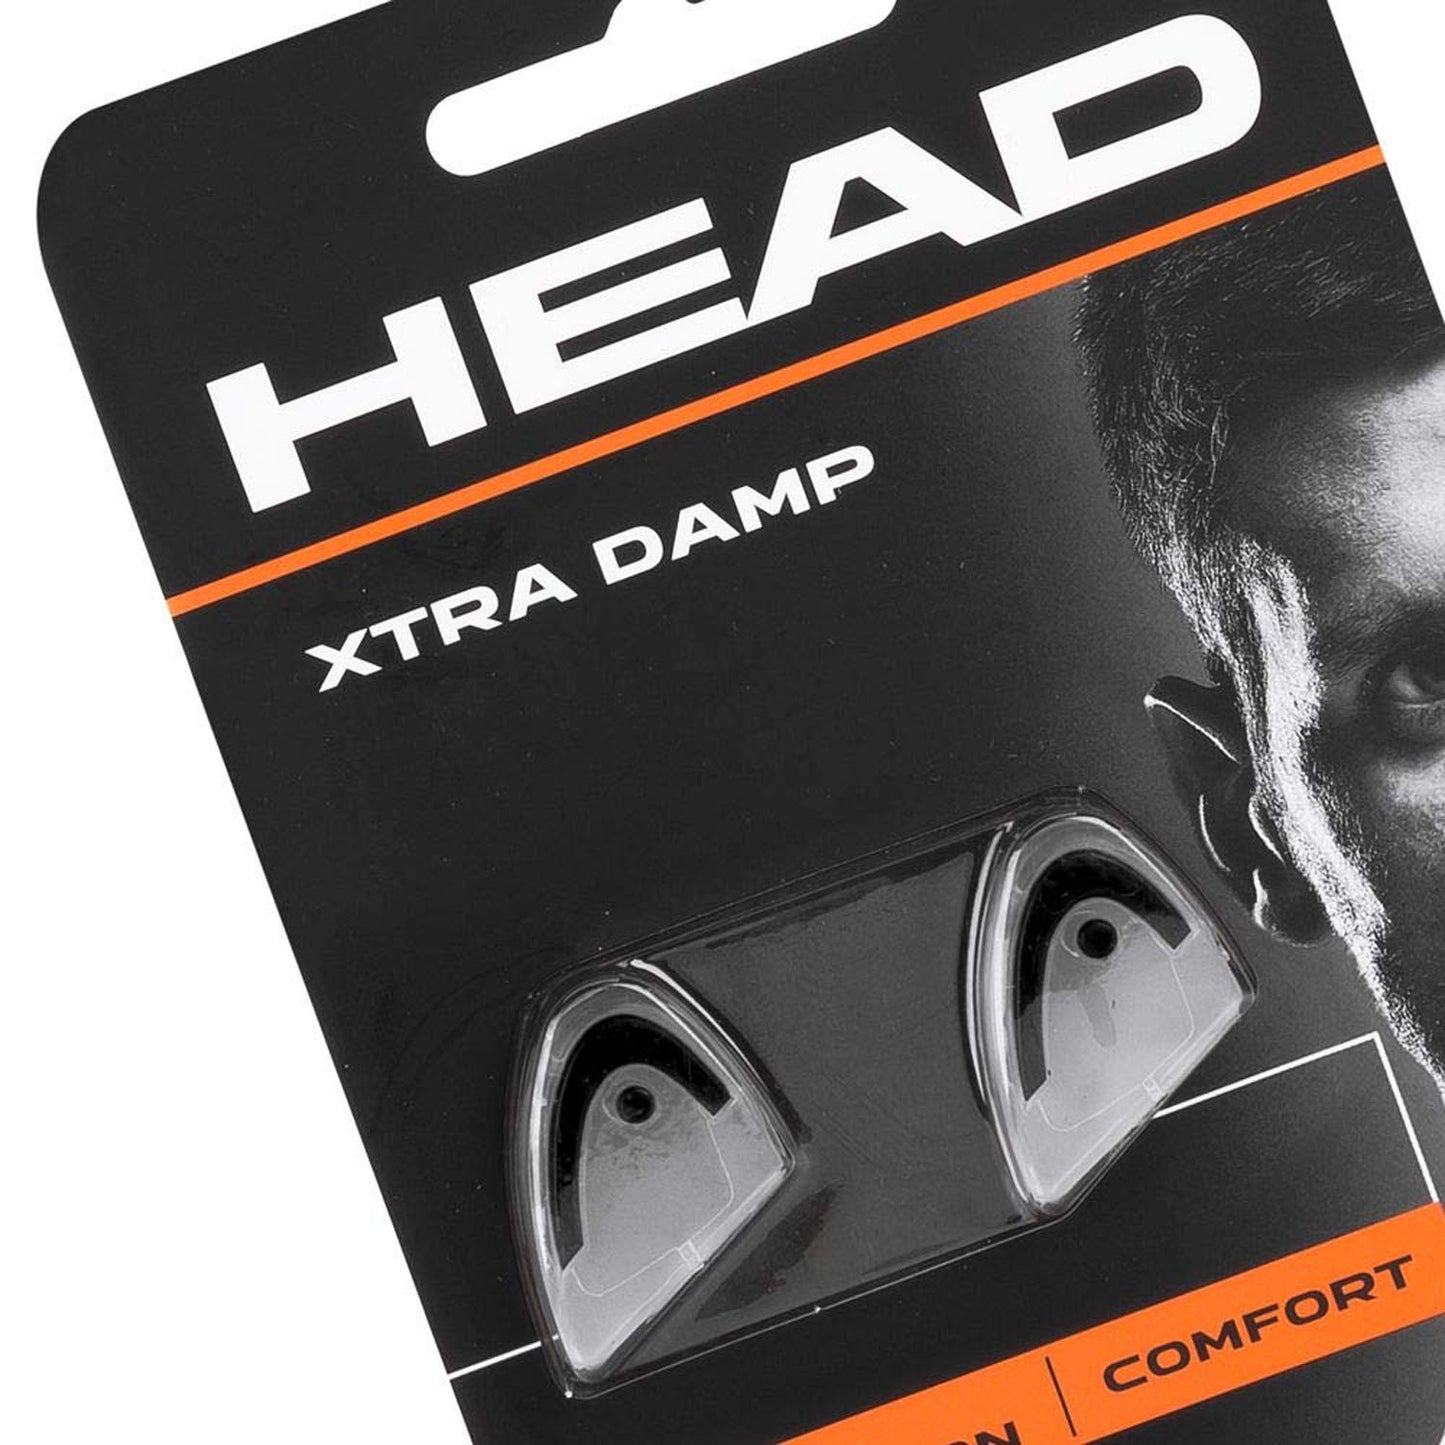 Head Xtra Damp Tennis Dampner - Best Price online Prokicksports.com